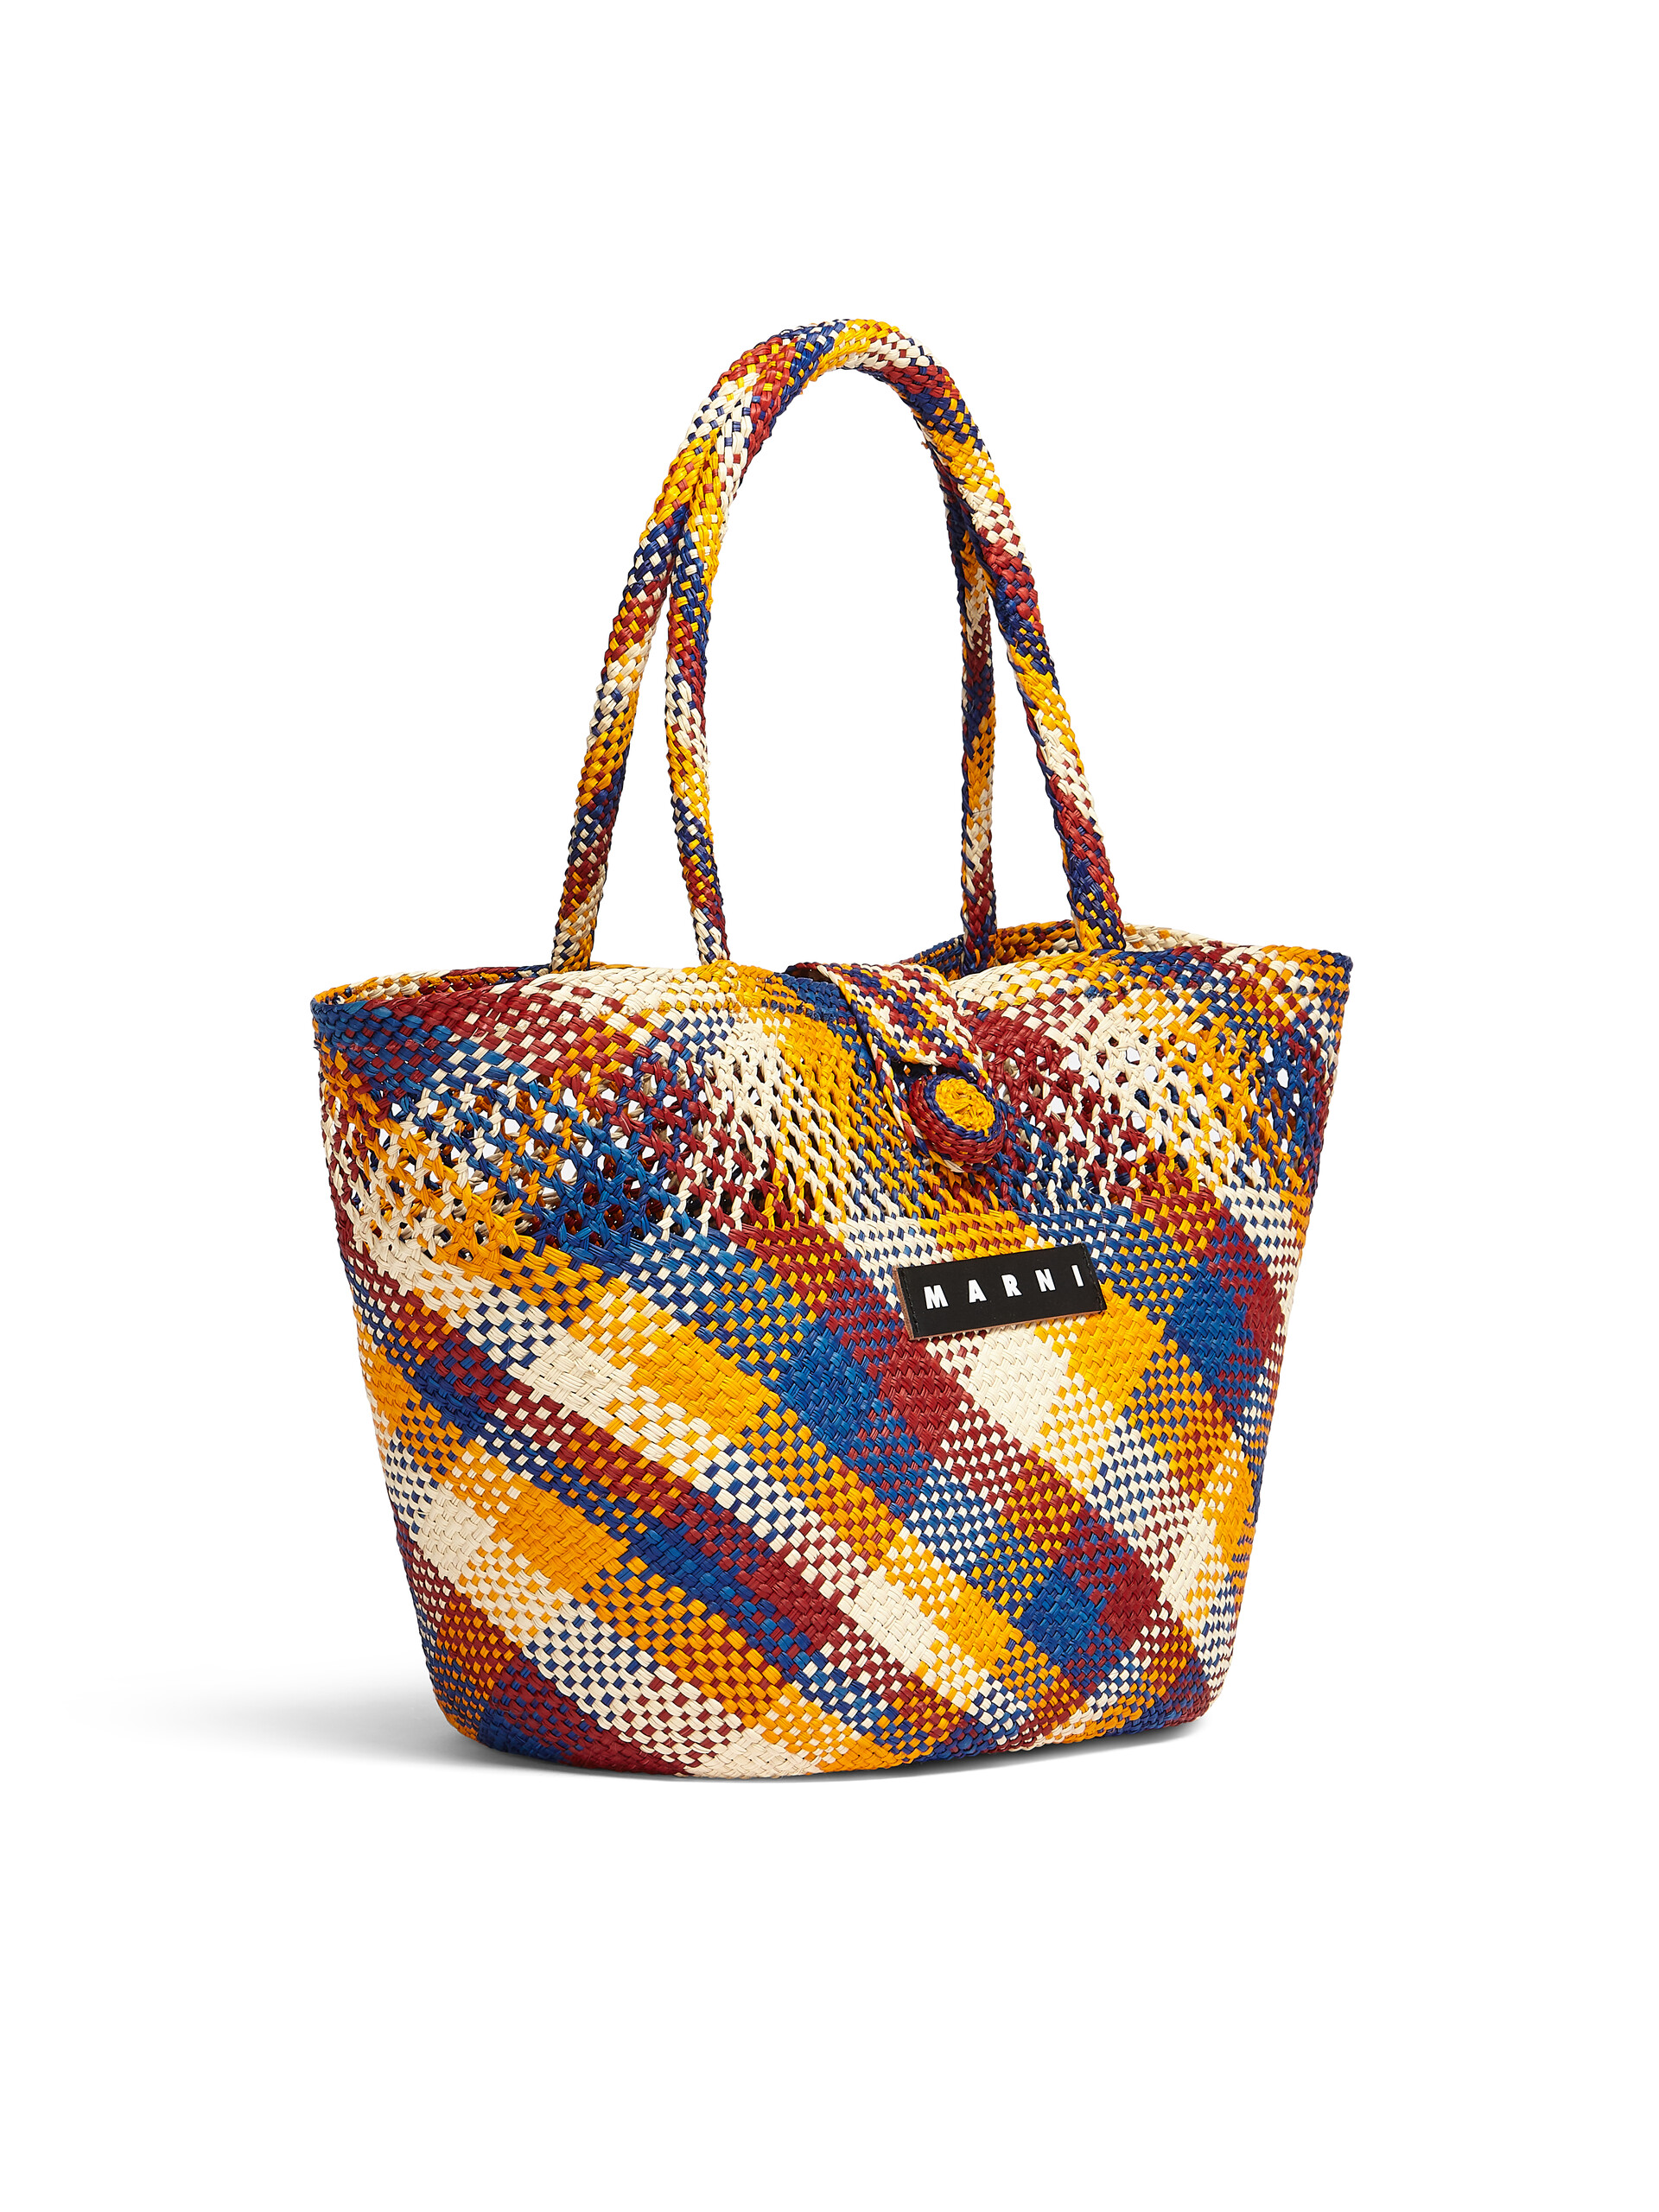 MARNI MARKET BEACH bag in multicolor natural fiber - Bags - Image 2